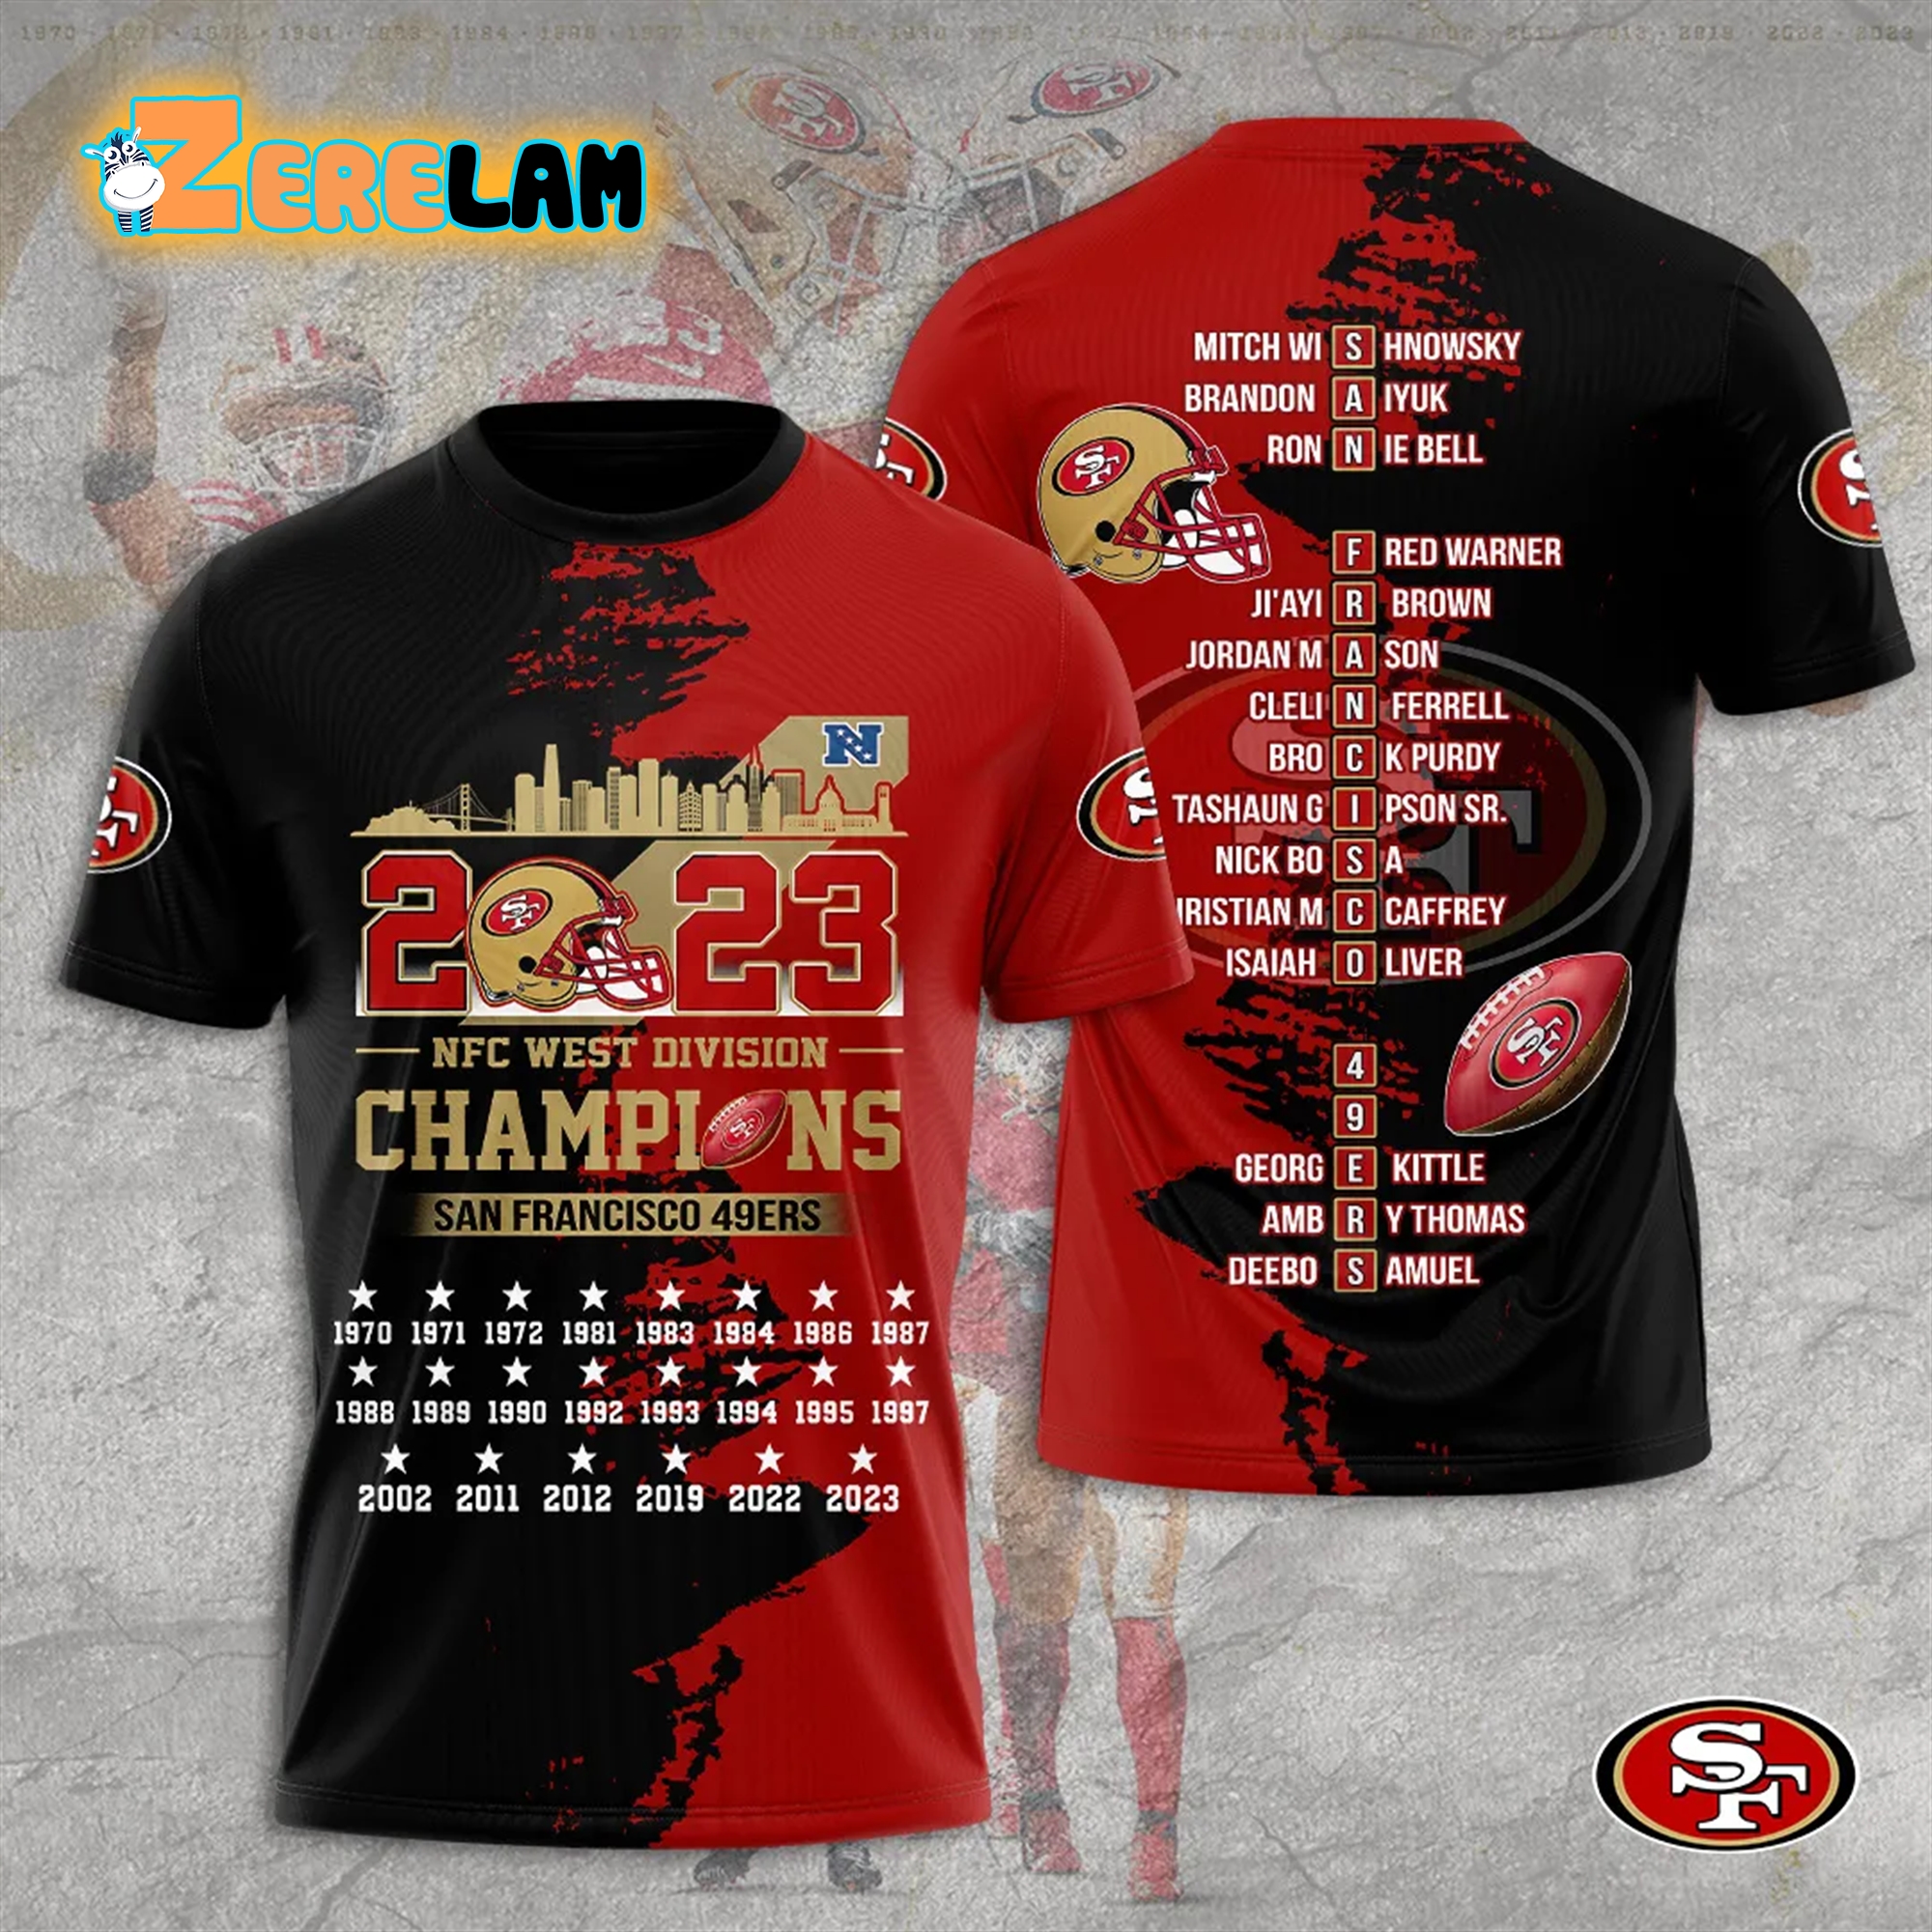 2023 NFC West Division Champions 49ers Shirt - Zerelam